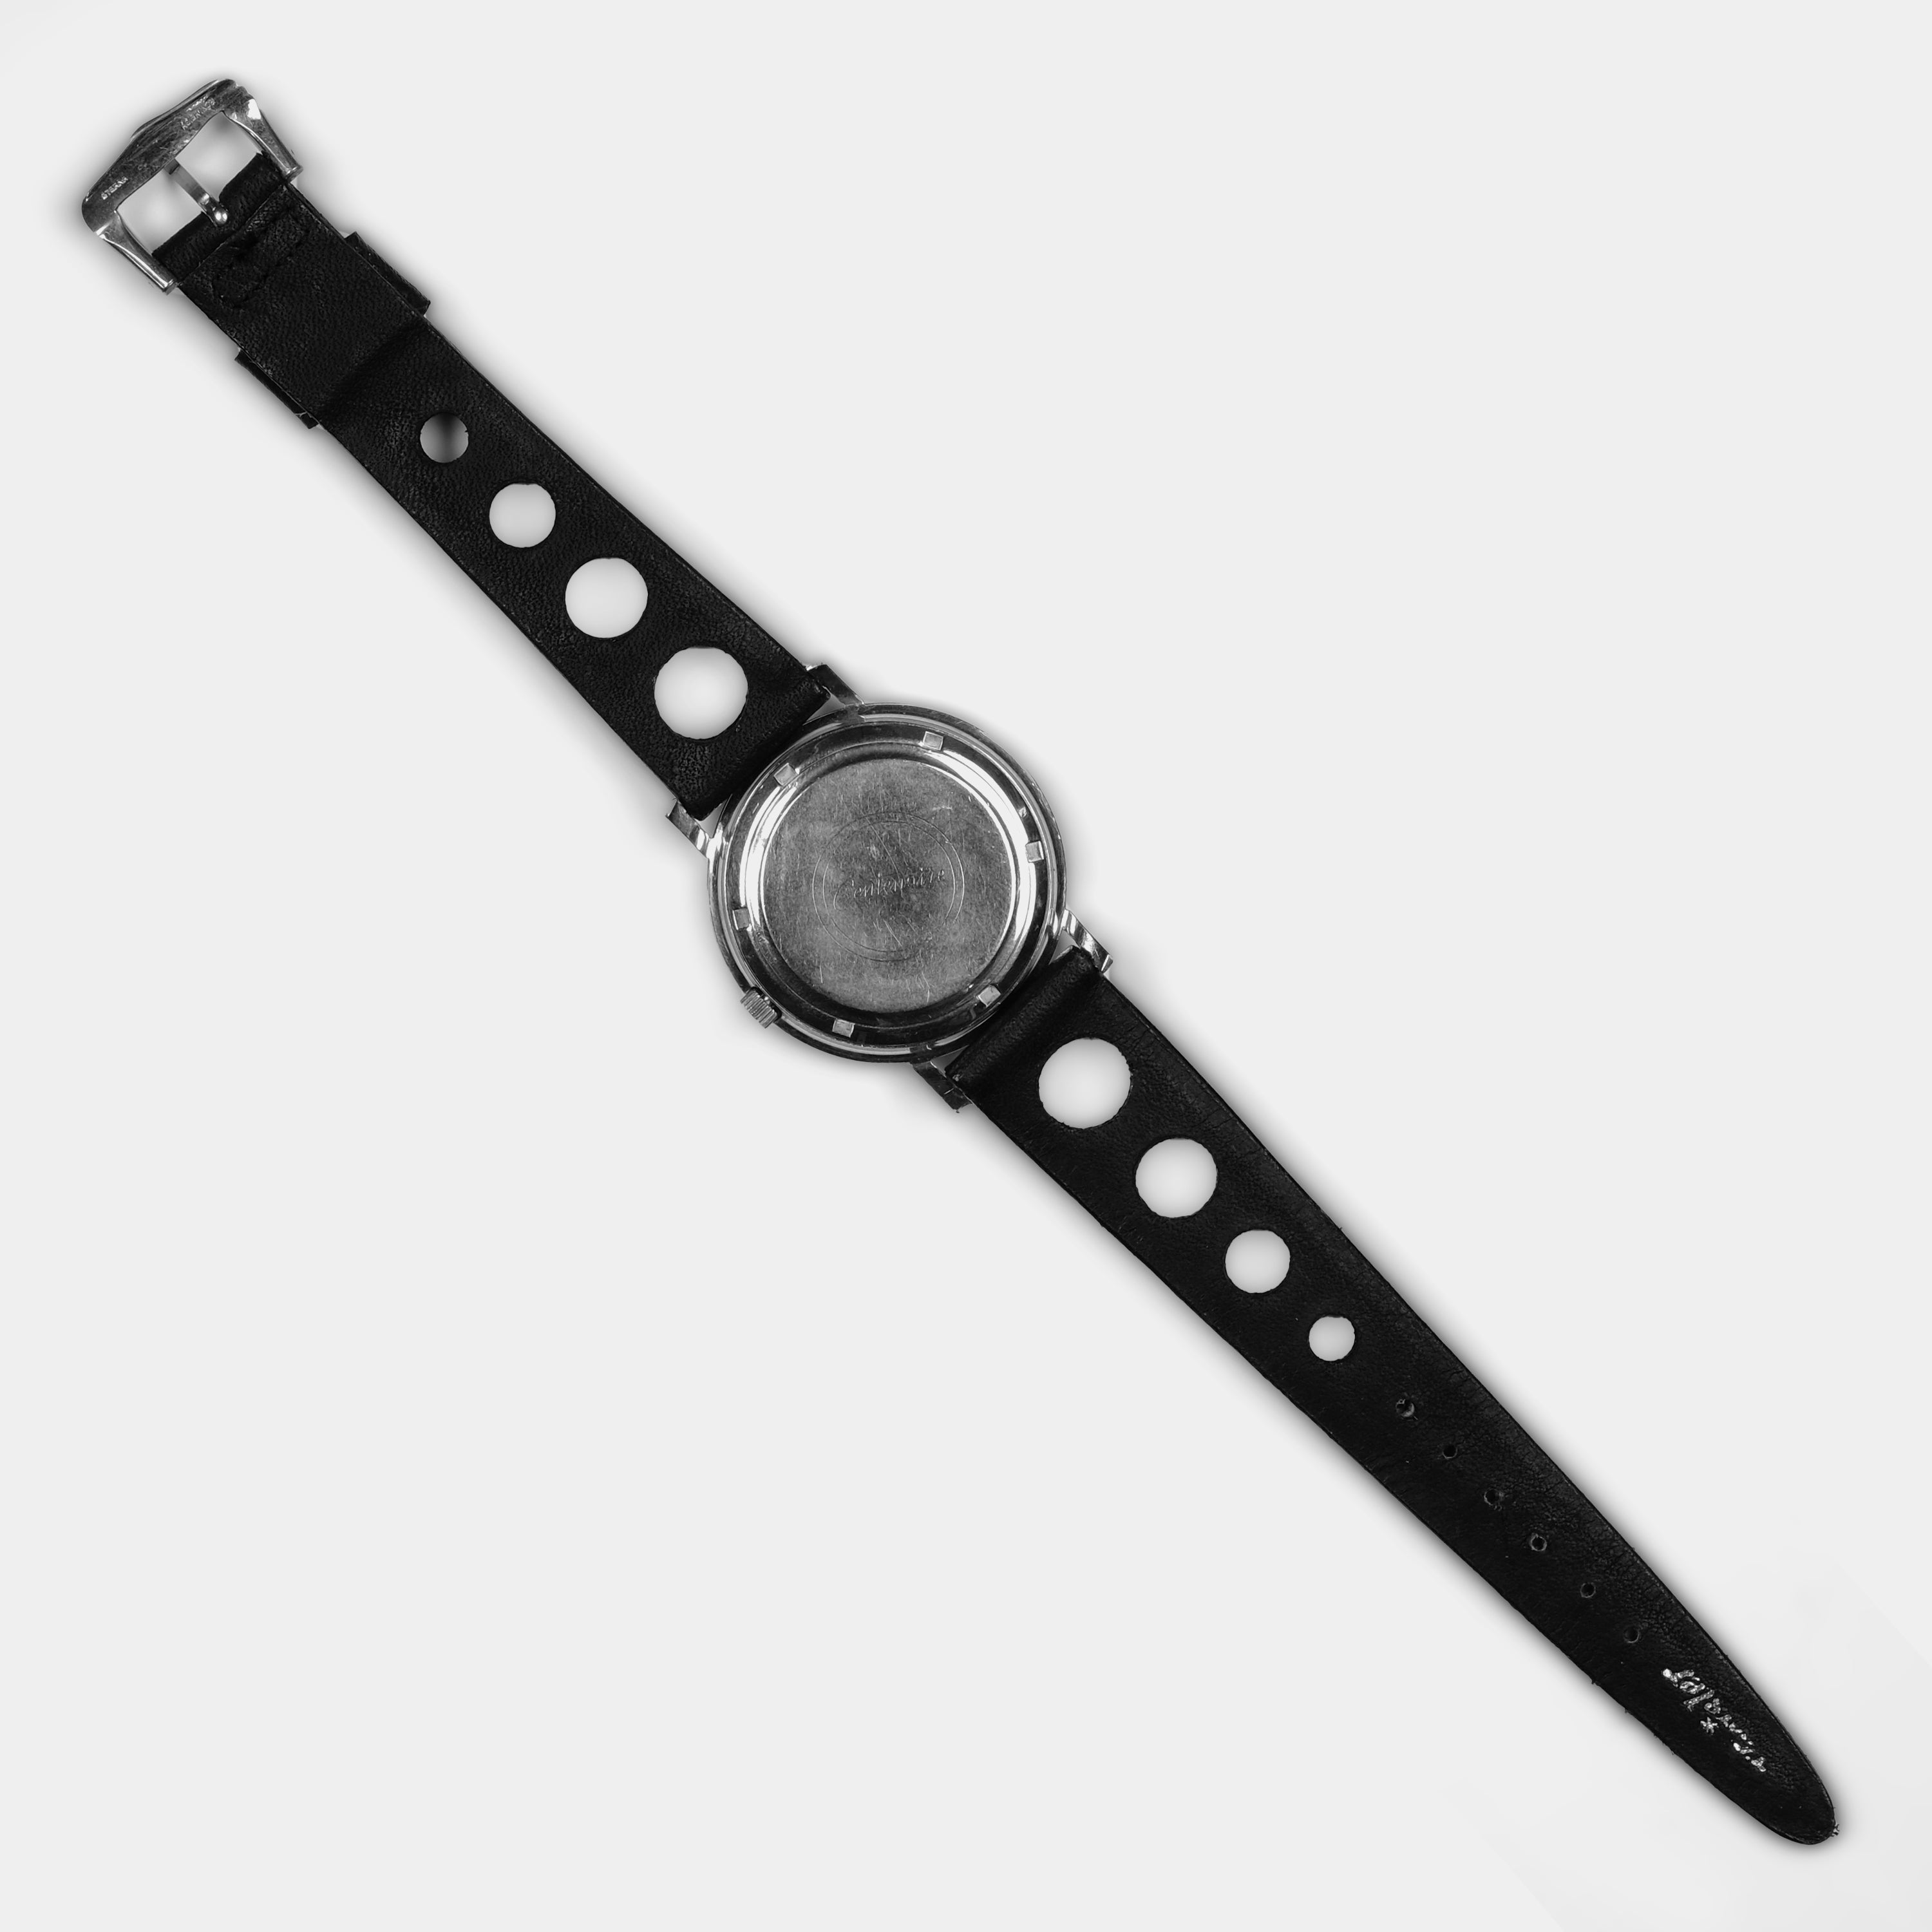 Eterna-Matic Centenaire "61" ref. 106 IVT Glossy Black "Mirror" Dial Circa 1963 Wristwatch